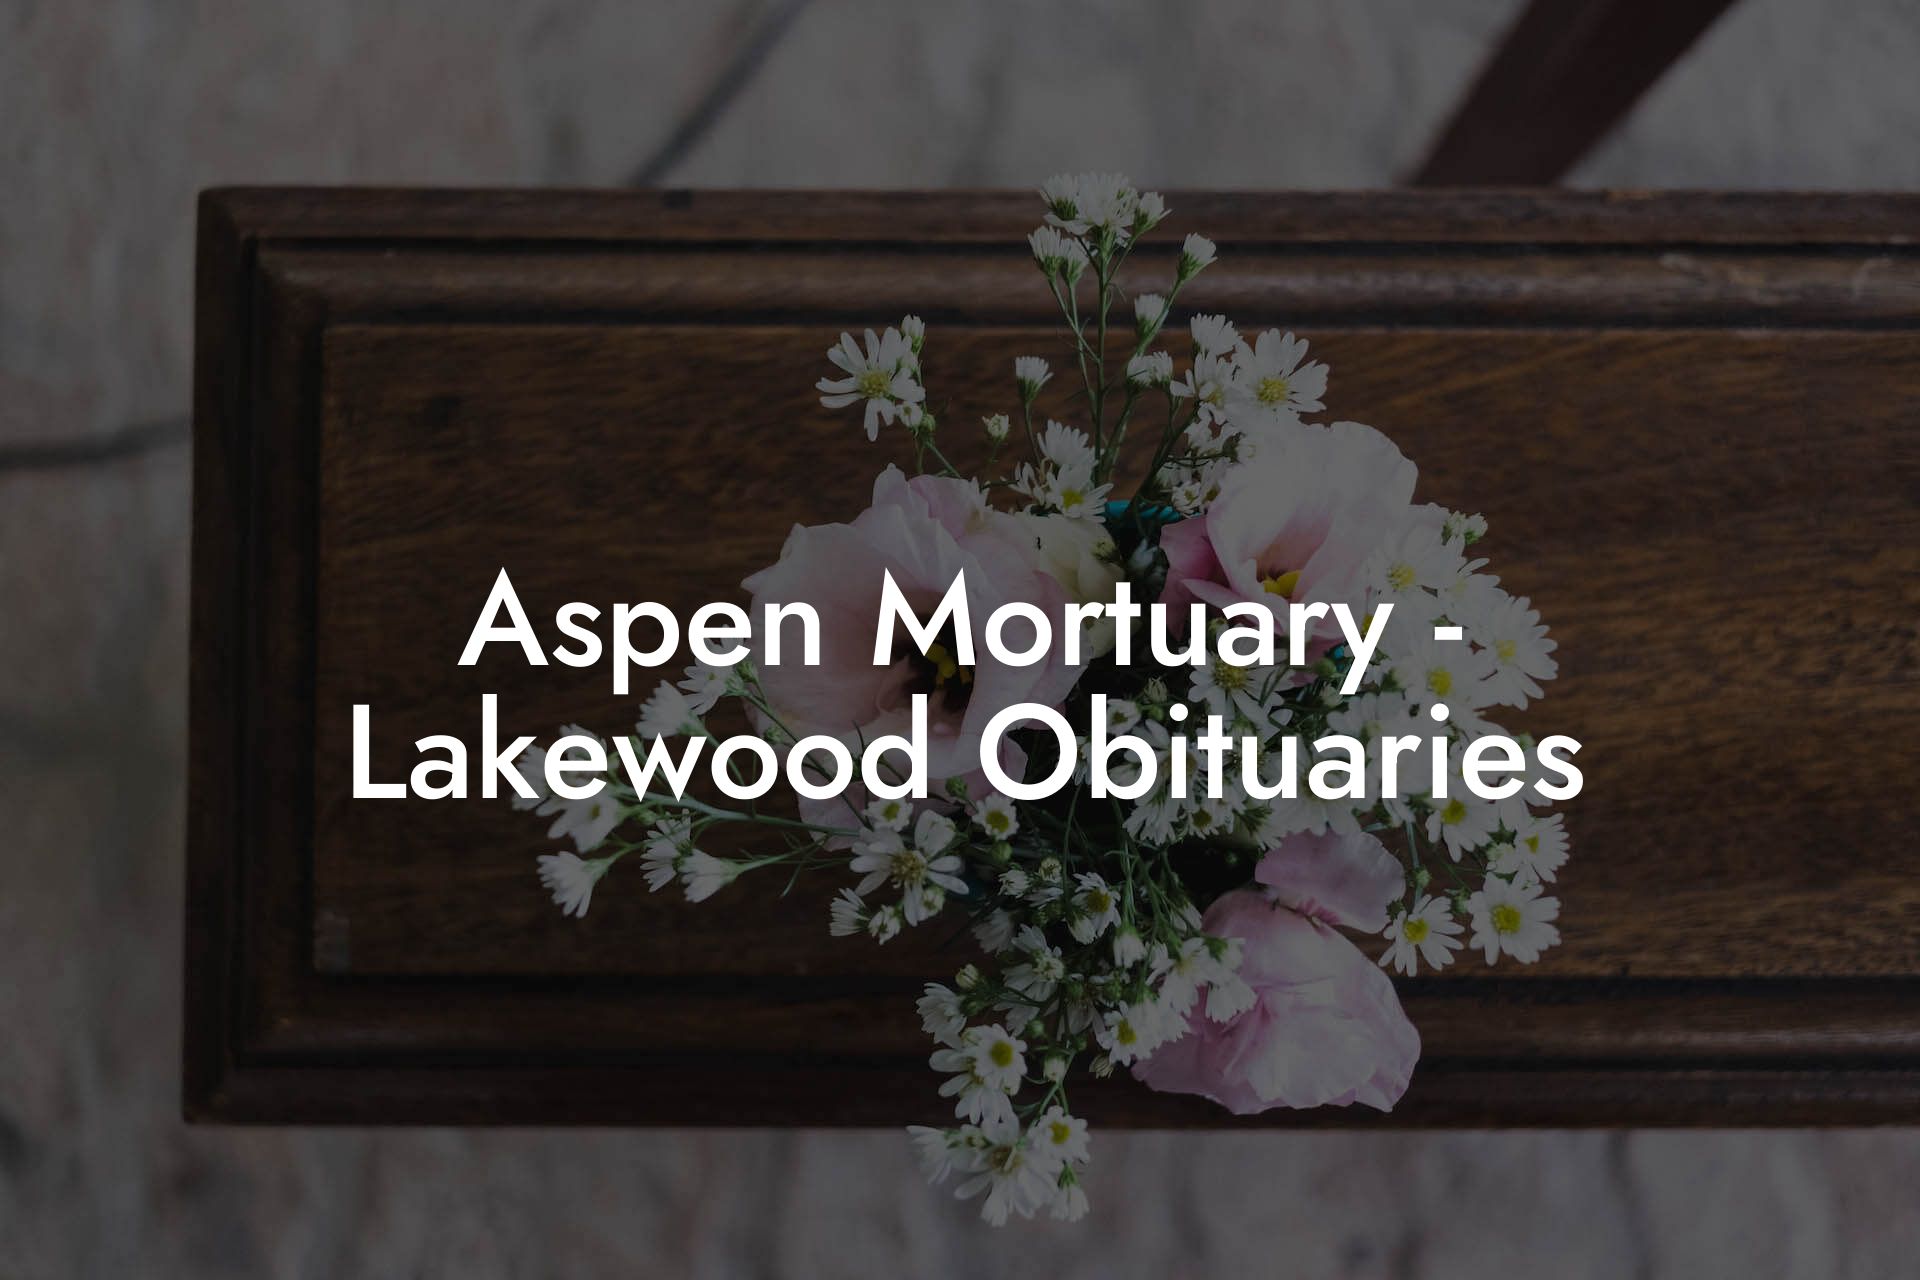 Aspen Mortuary - Lakewood Obituaries